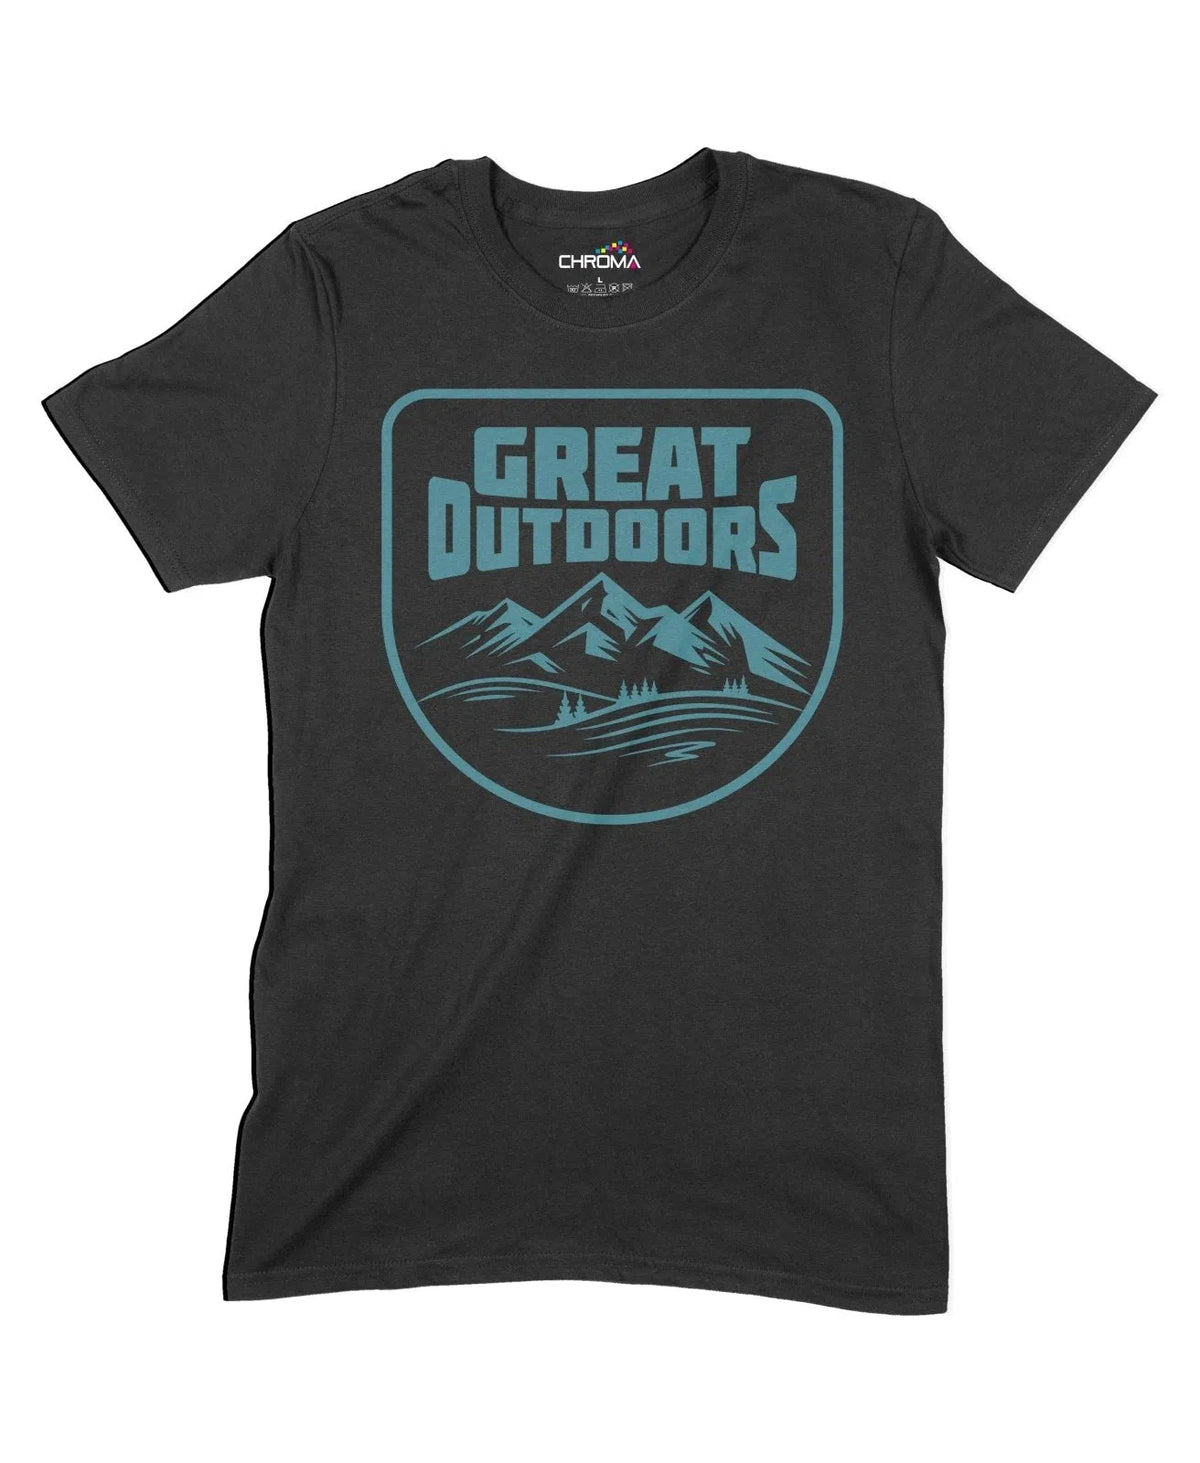 Great Outdoors Unisex Adult T-Shirt Chroma Clothing